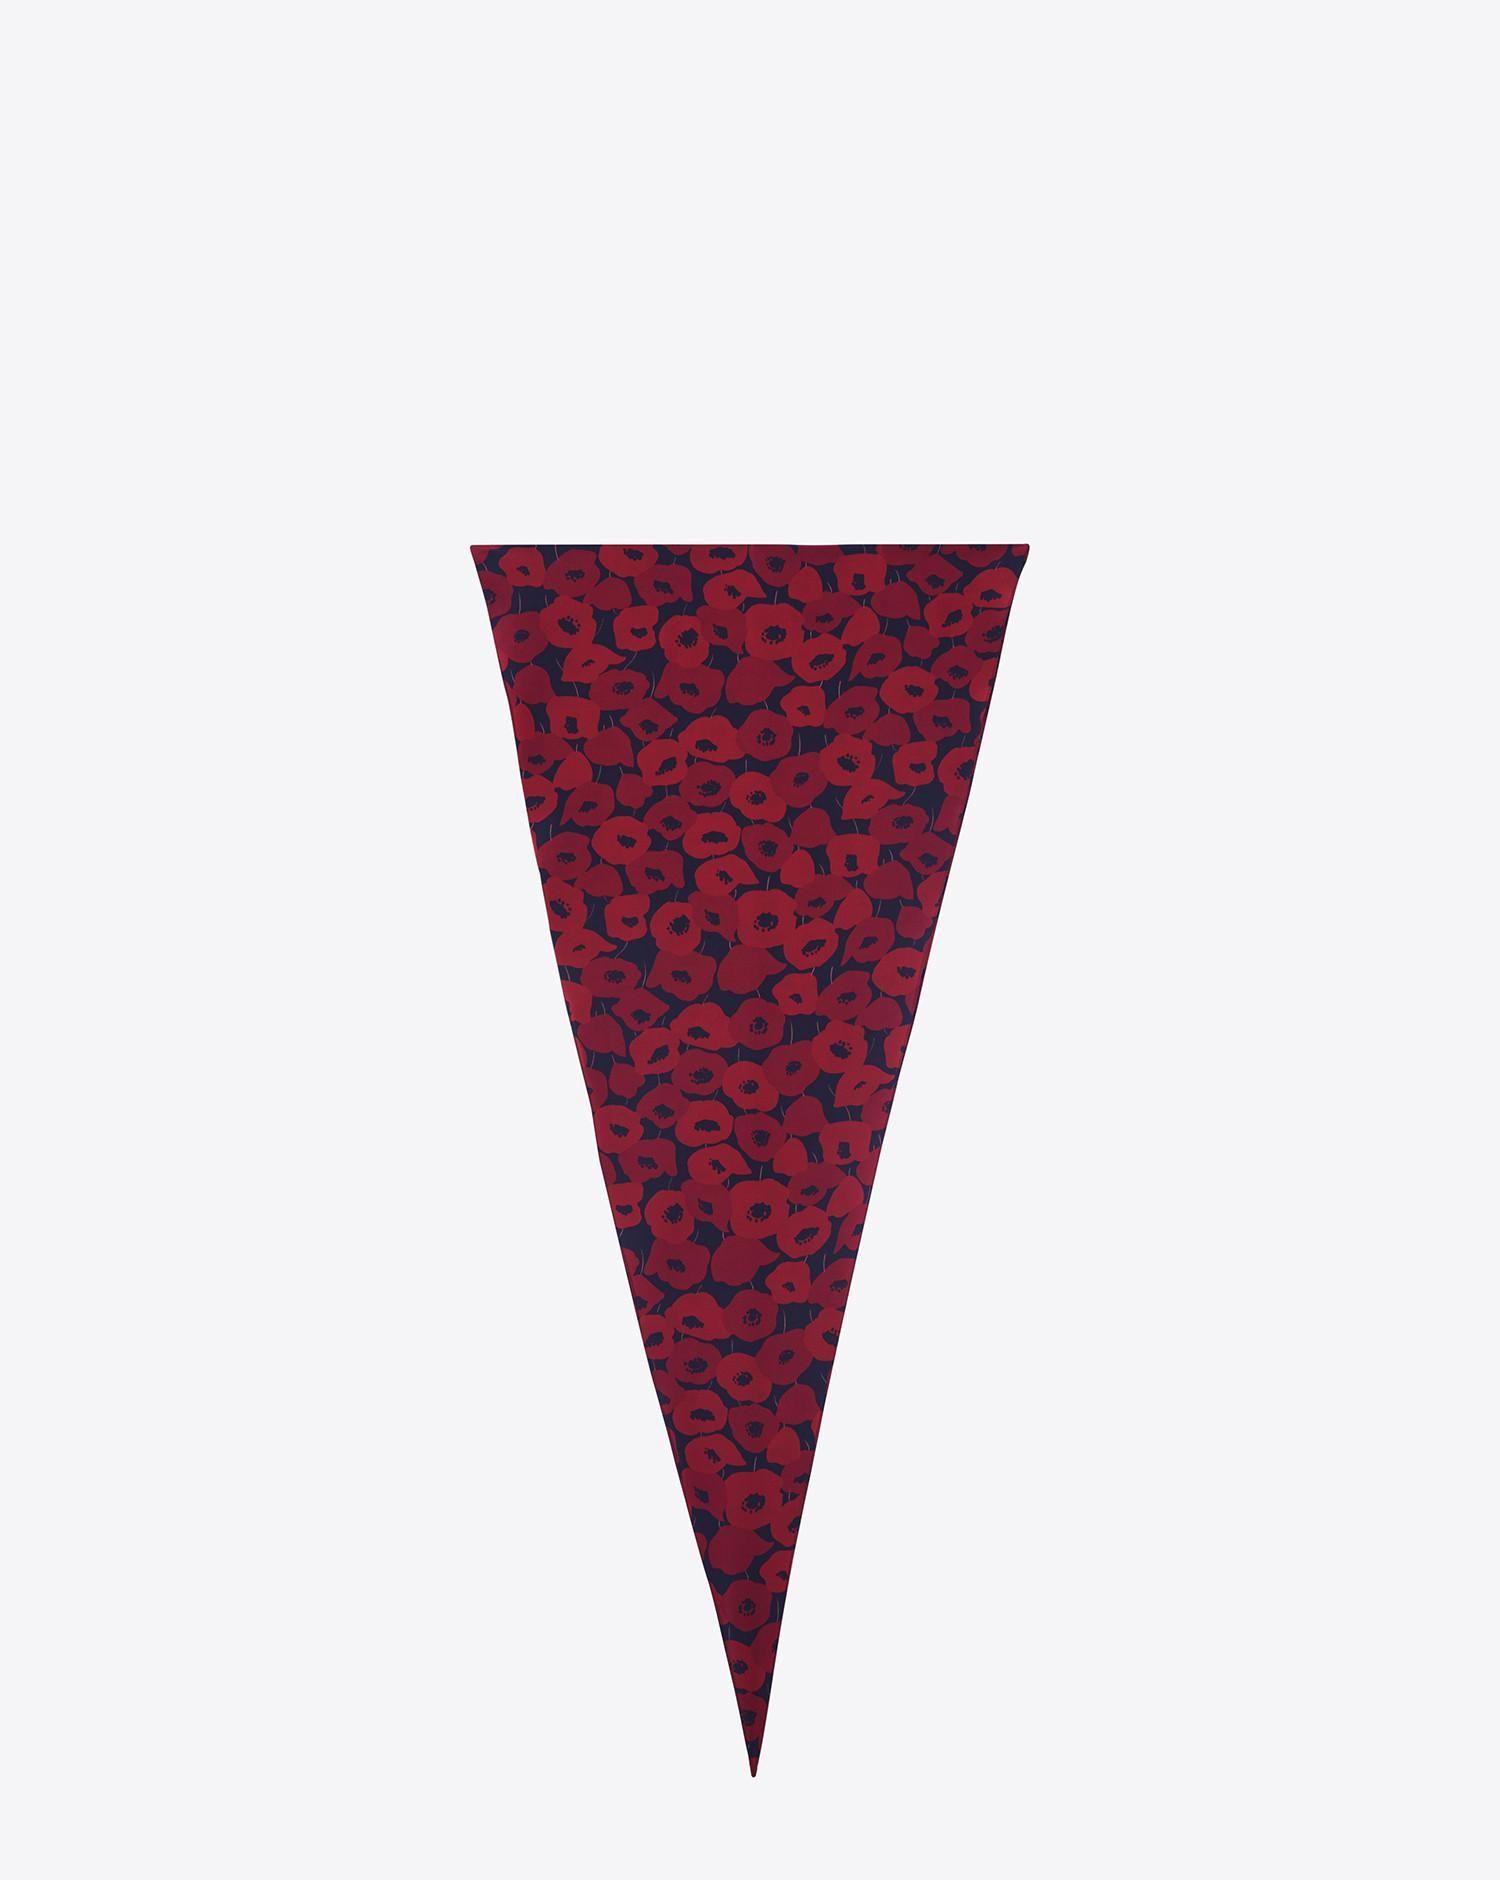 Red and Black Diamond Shape Logo - Saint Laurent Diamond Shaped Scarves in Black